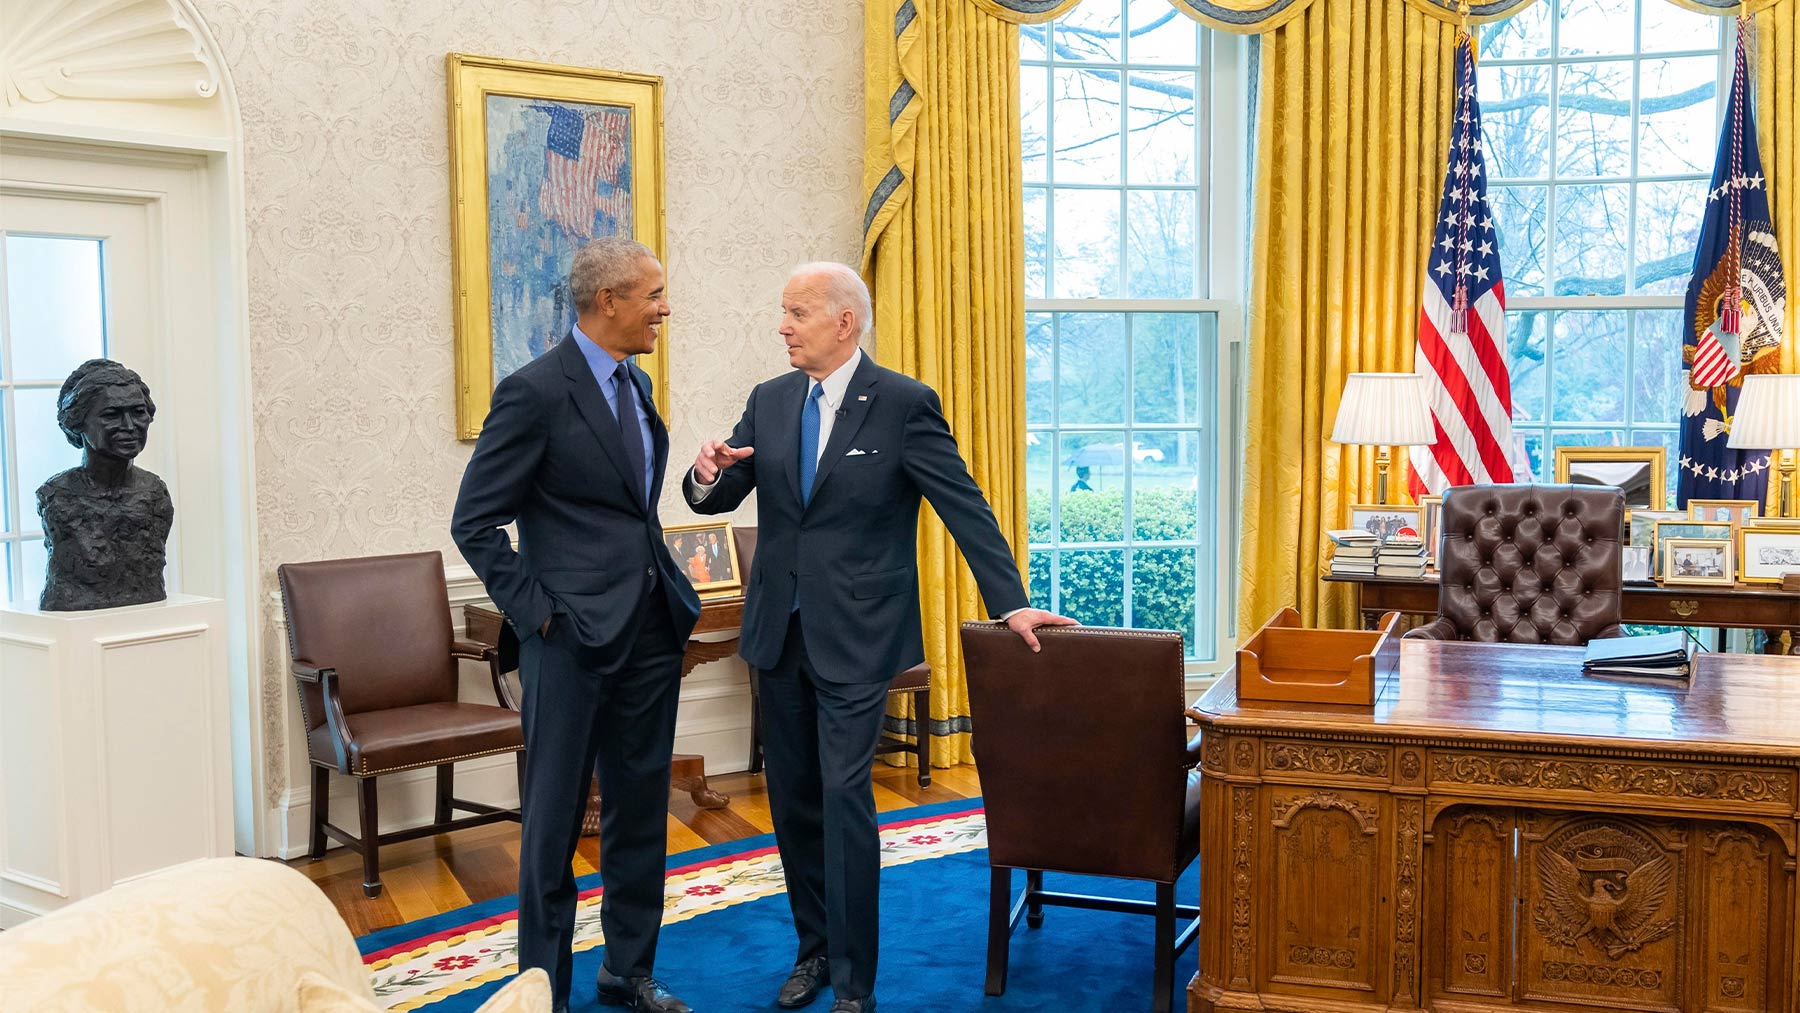 Biden conversa con Obama